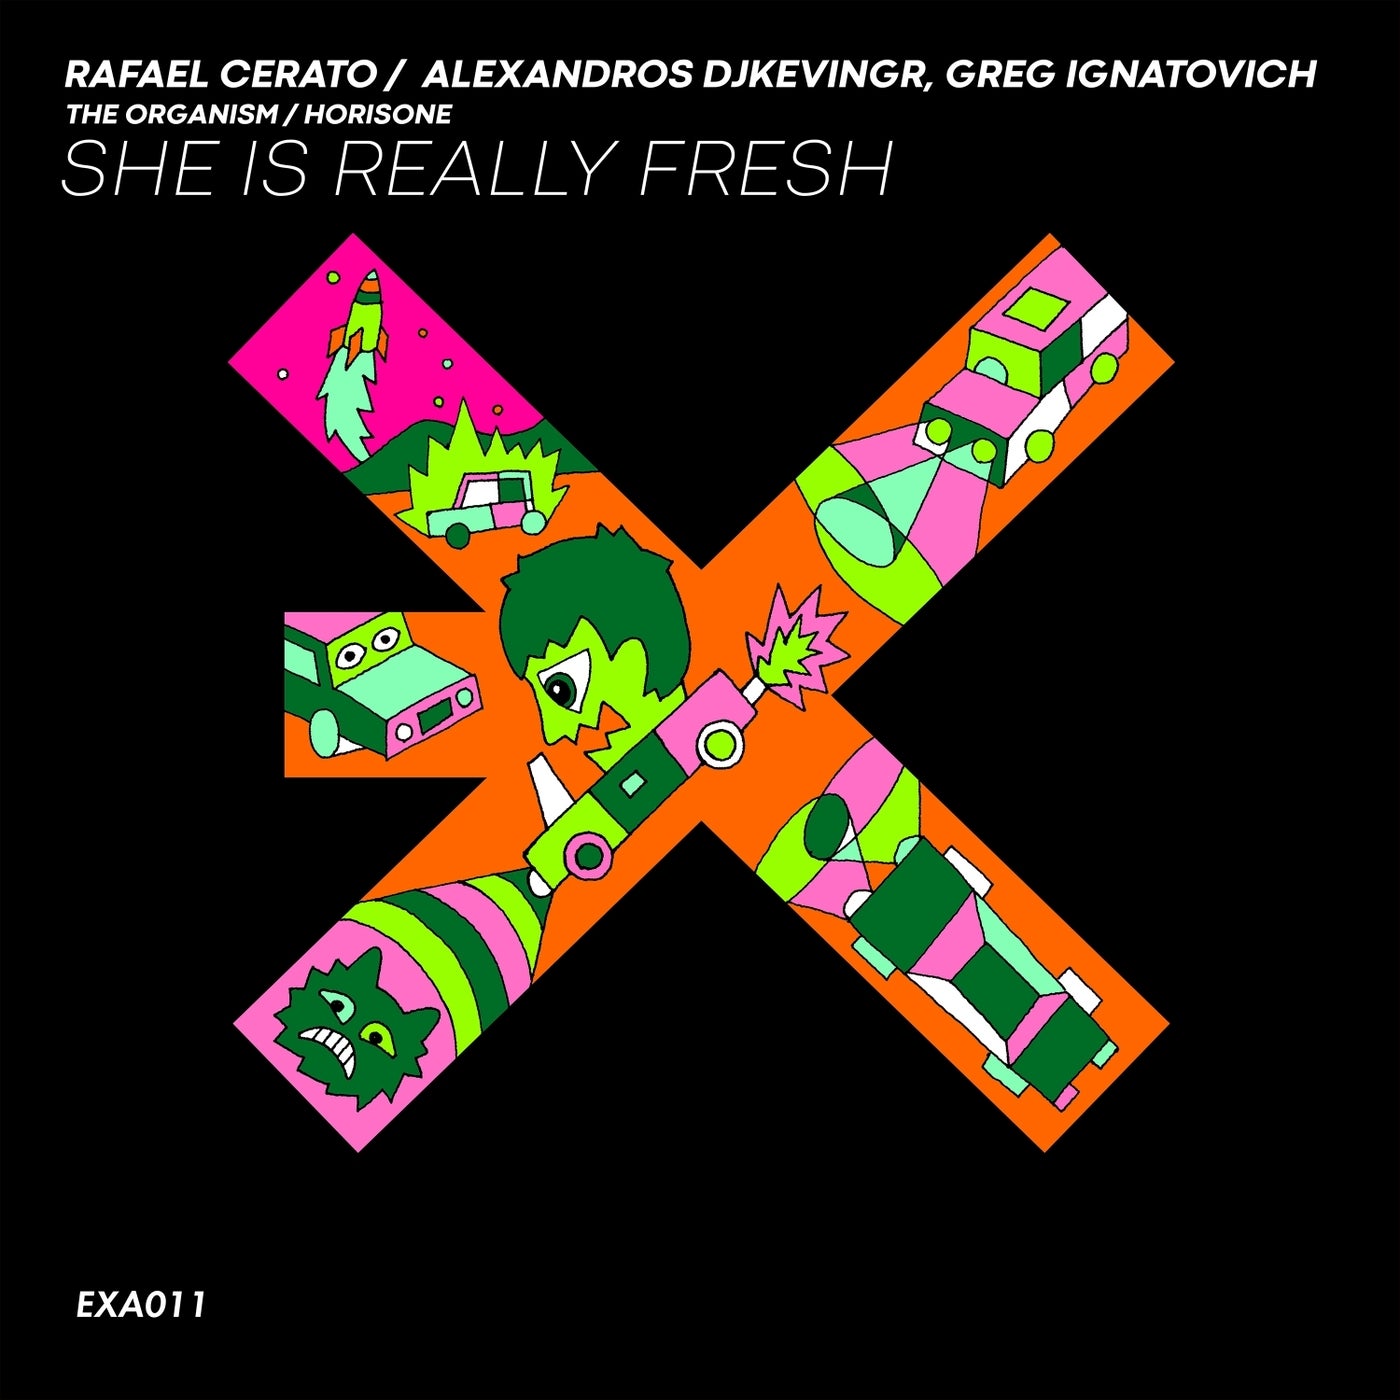 Greg Ignatovich, Alexandros Djkevingr, Rafael Cerato - Countdown (Original Mix)